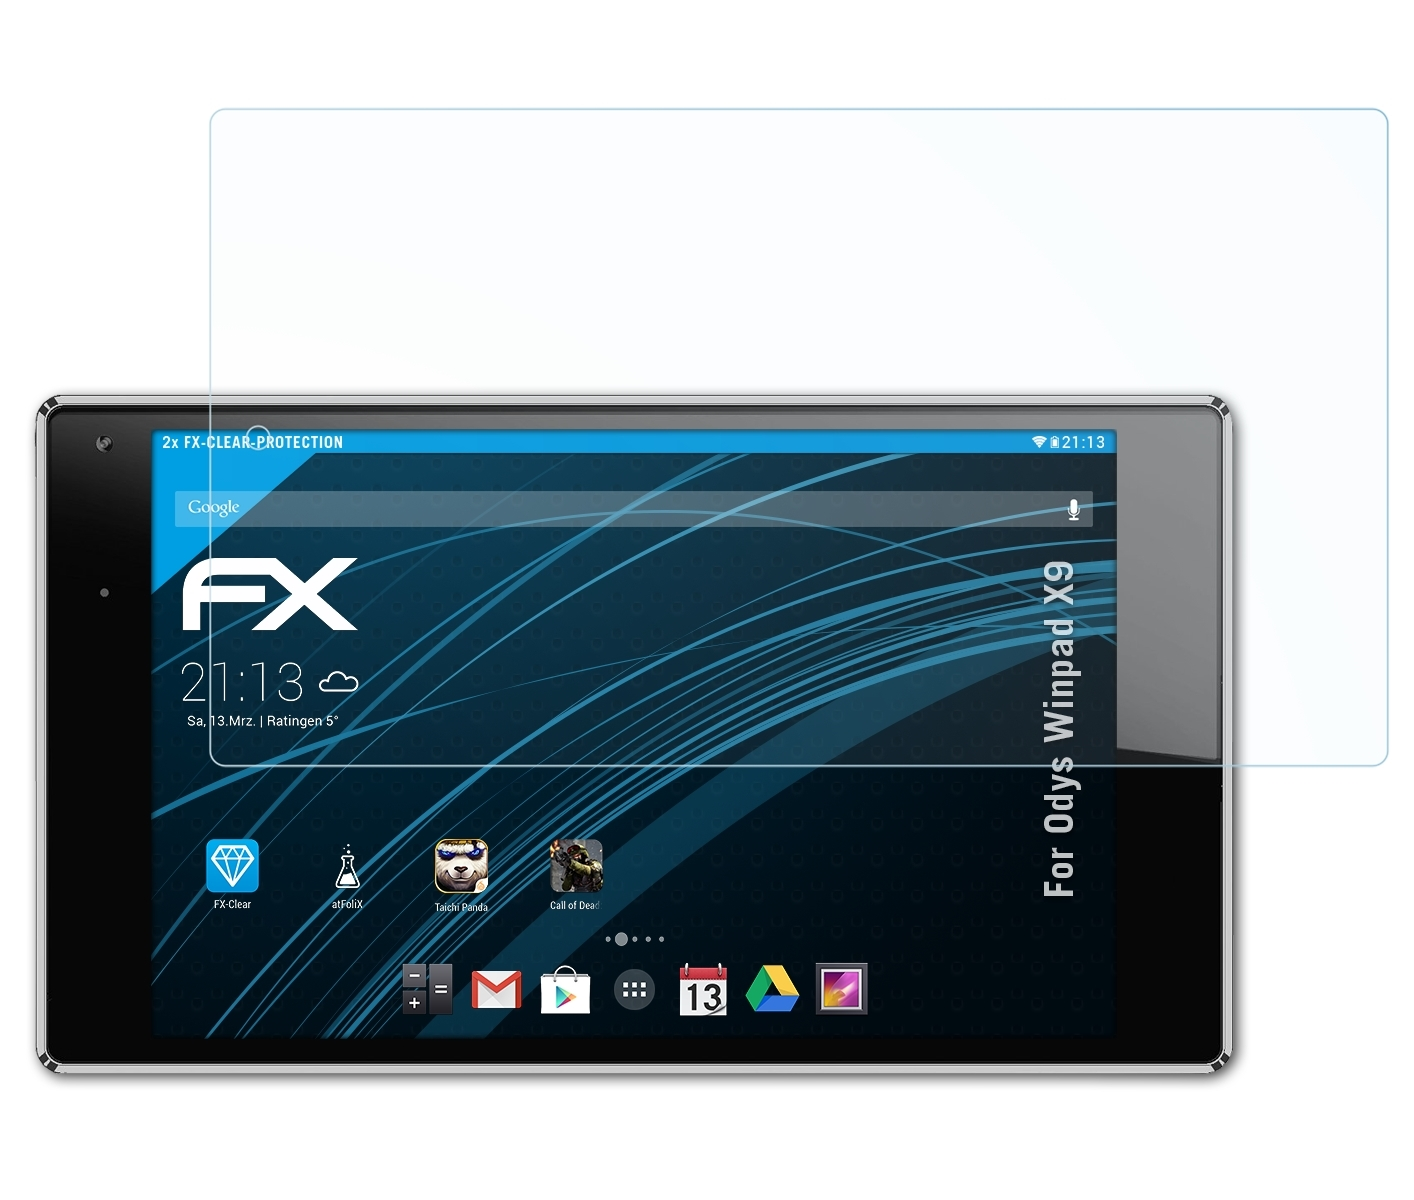 ATFOLIX X9) FX-Clear Odys 2x Winpad Displayschutz(für